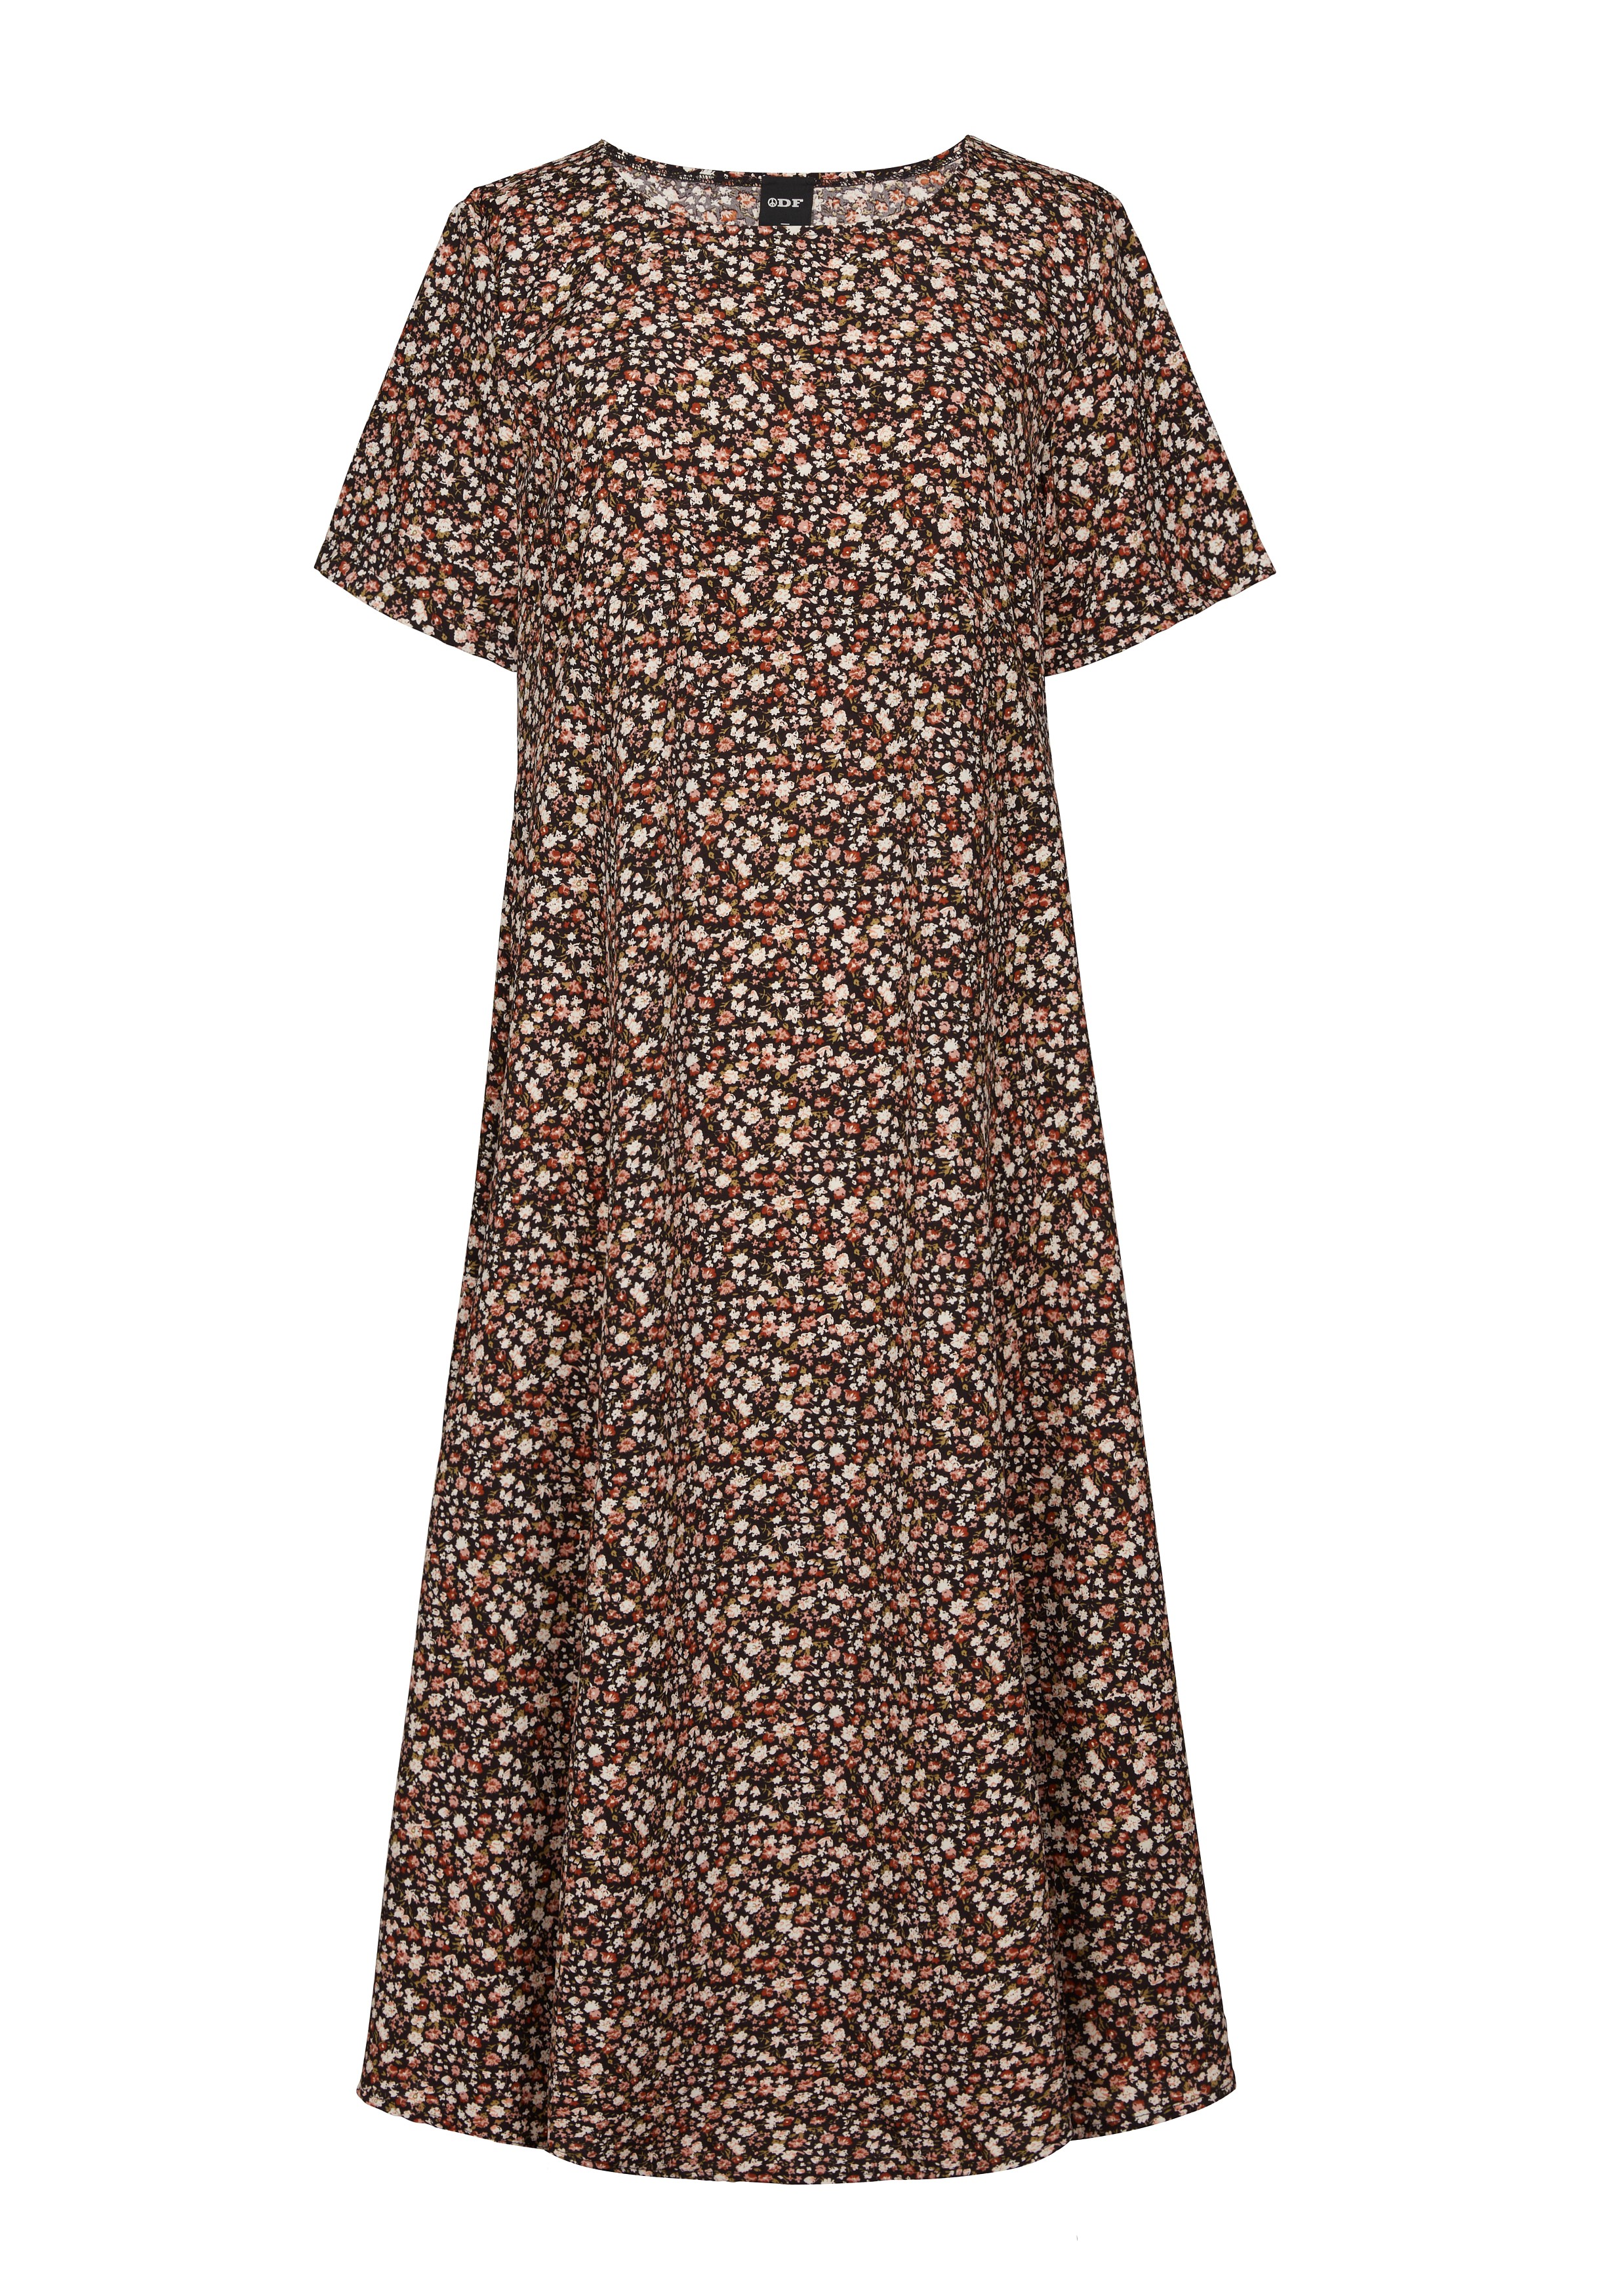 Shuri Brown Floral dress